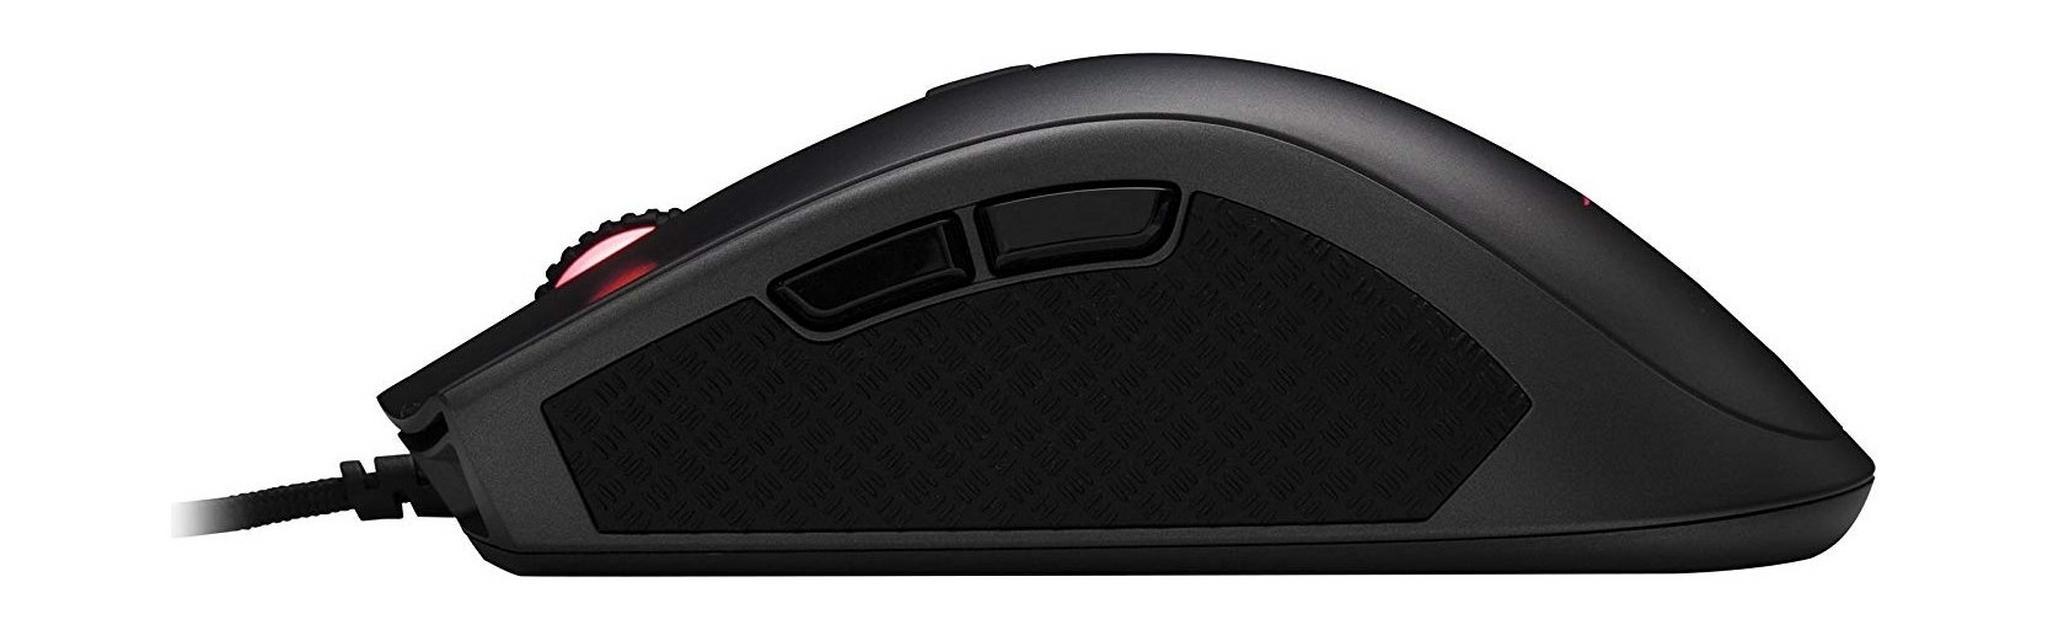 HyperX Pulsefire FPS Pro RGB Gaming Mouse - Black